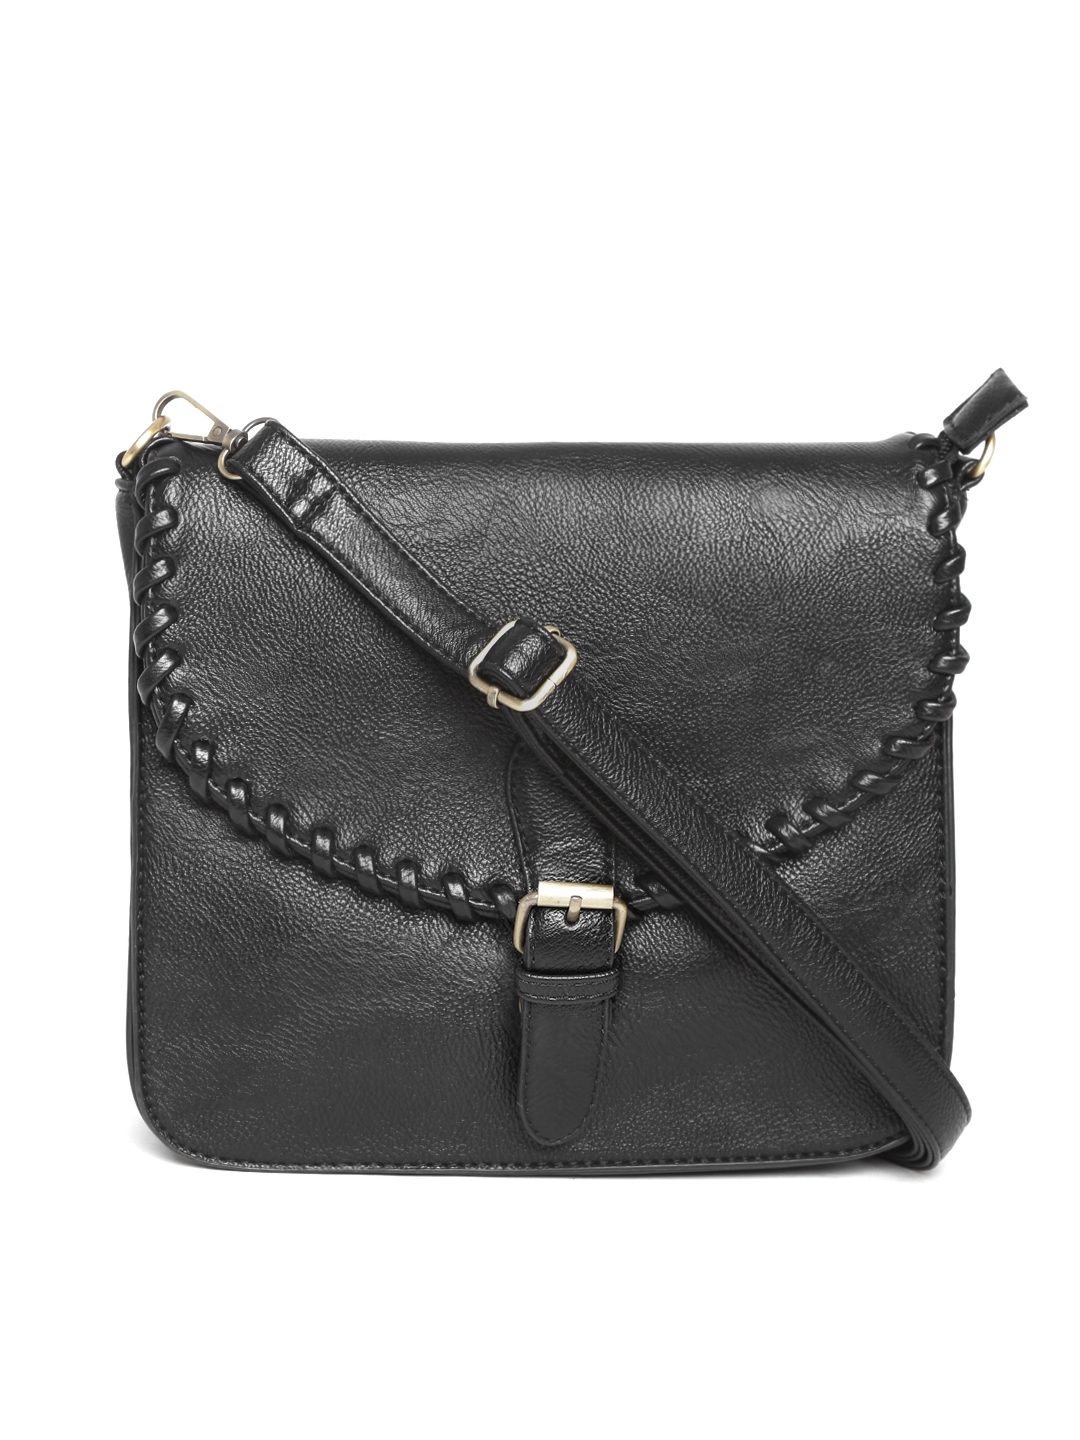 Buy Lino Perros Black Sling Bag - Handbags for Women 1628900 | Myntra